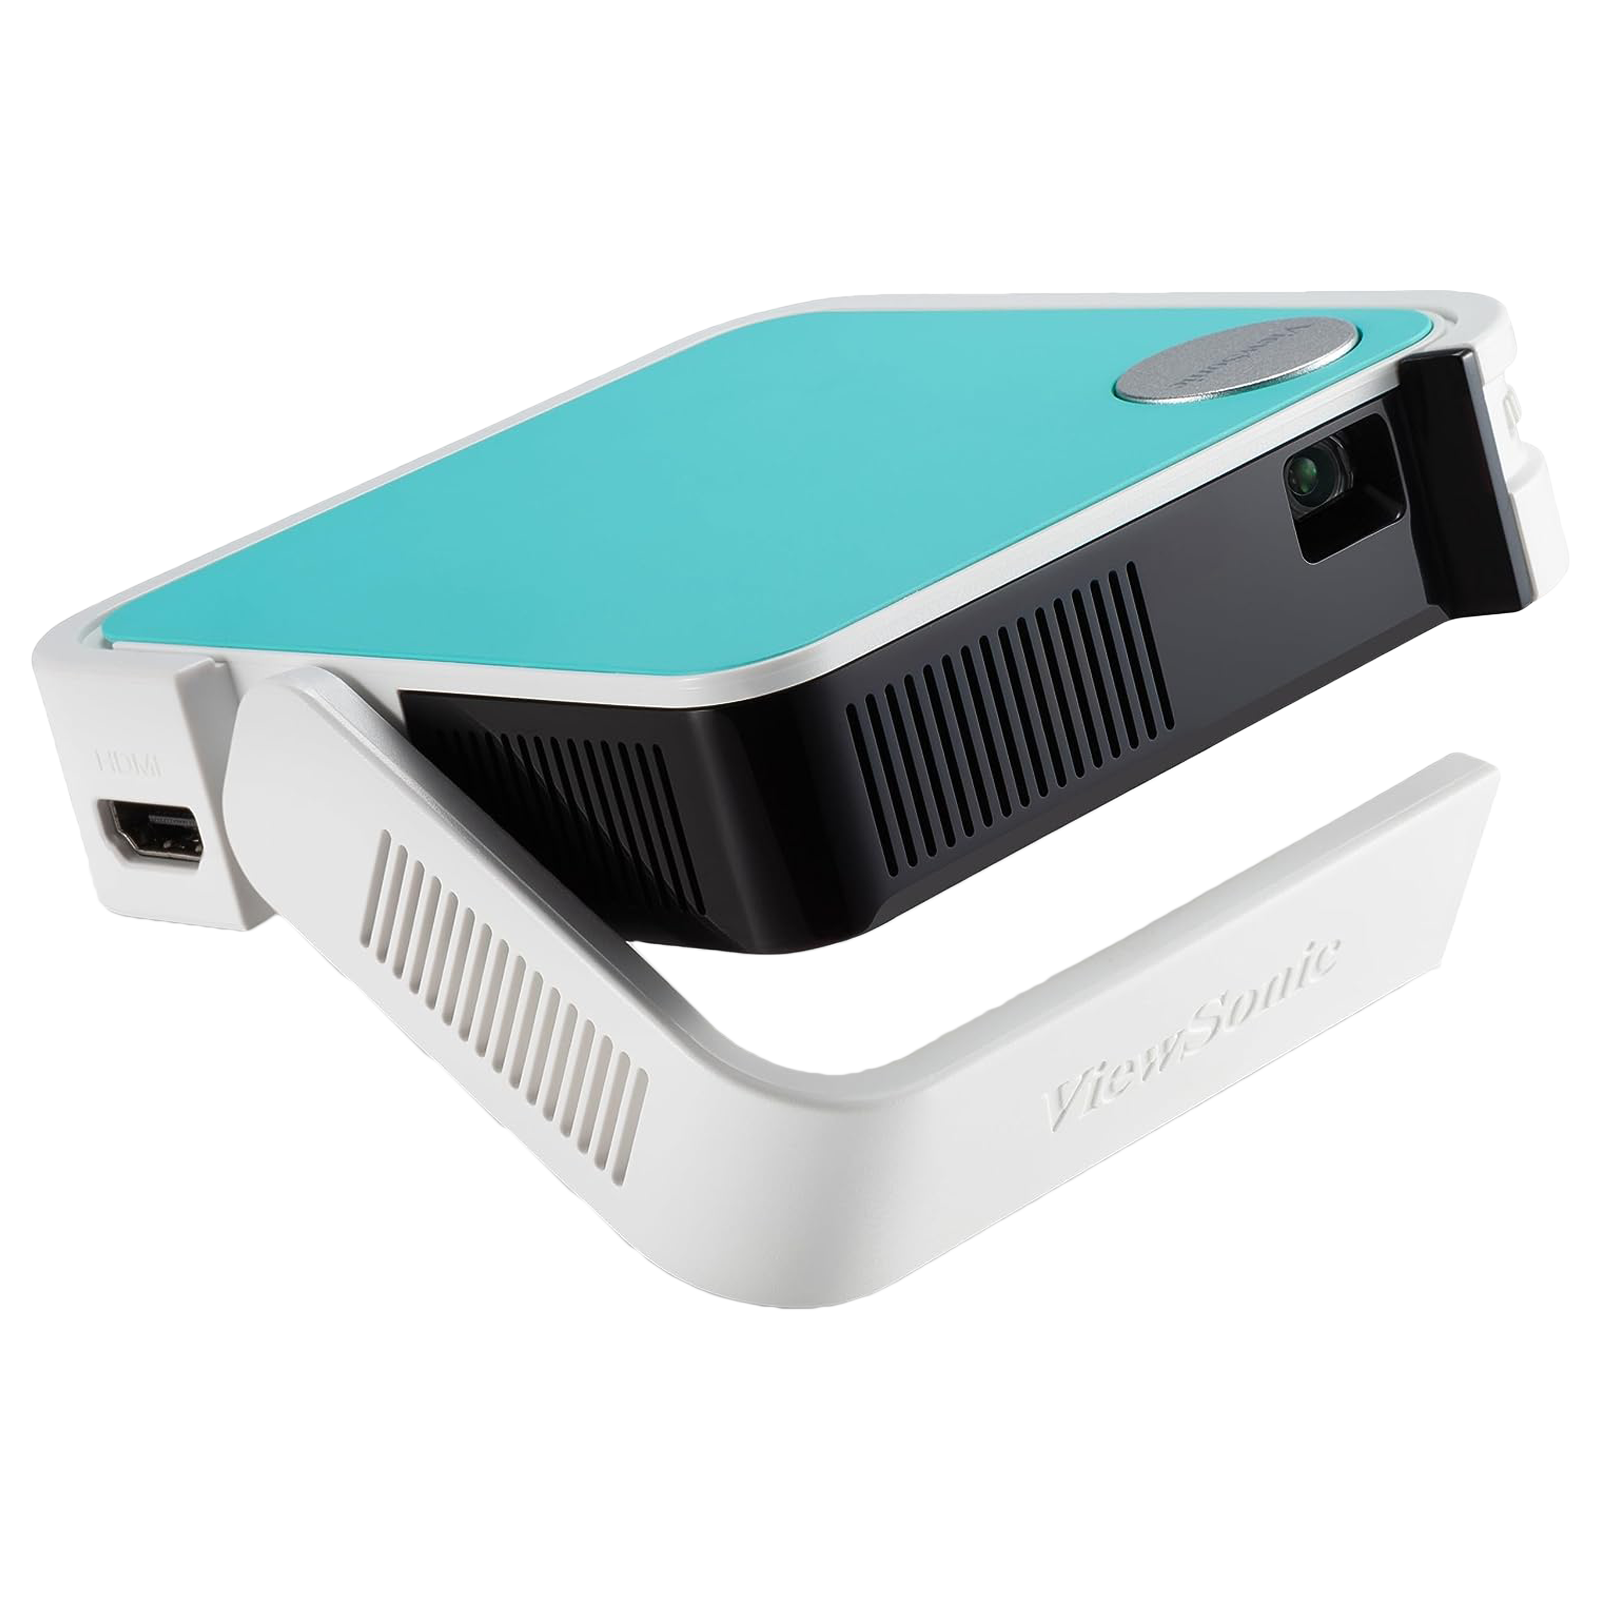 ViewSonic M1 Mini Plus WVGA LED Projector (120 Lumens, HDMI, USB, WiFi and Bluetooth, JBL Speaker, White)